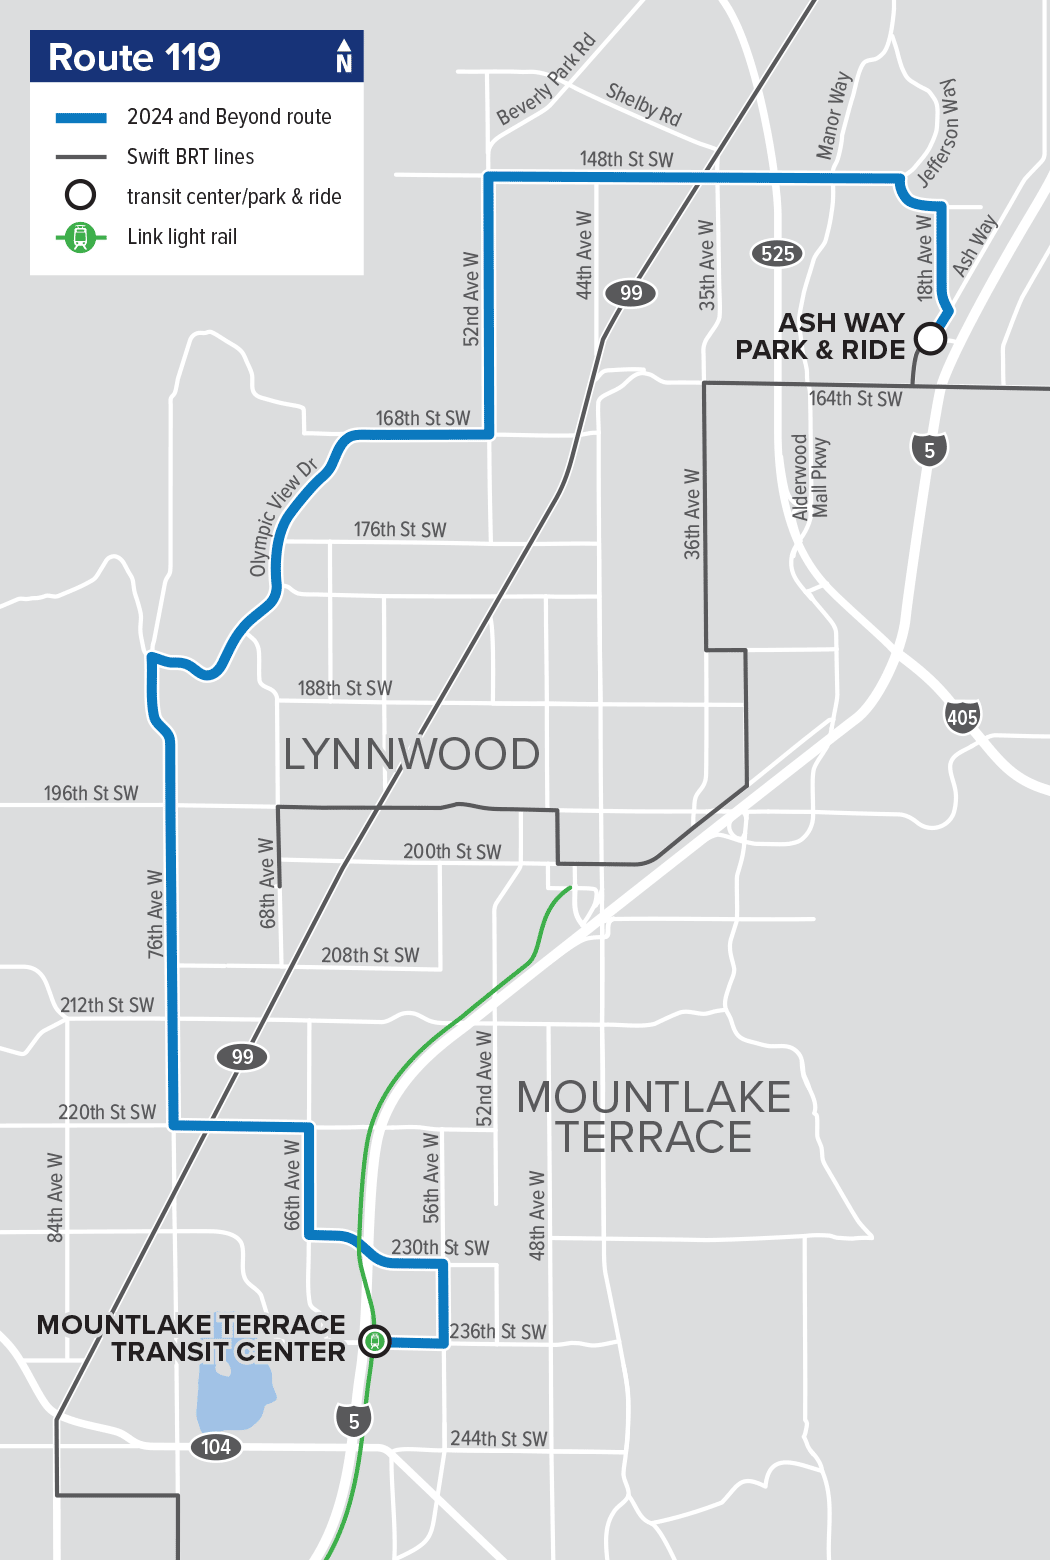 Route 119: Ash Way – Mountlake Terrace (increased frequency)